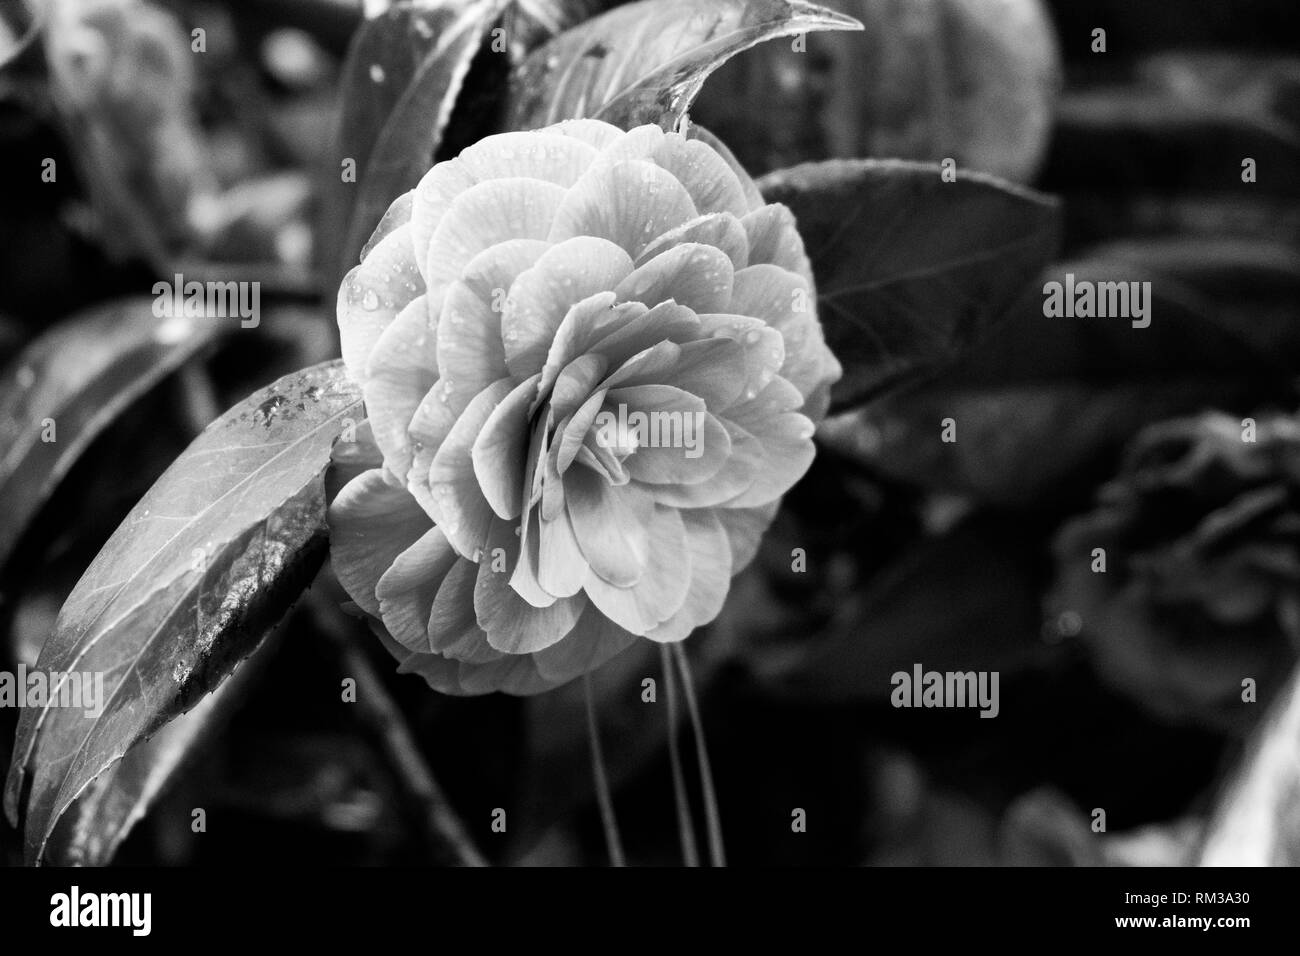 Japanese camellia camellia japonica Black and White Stock Photos ...